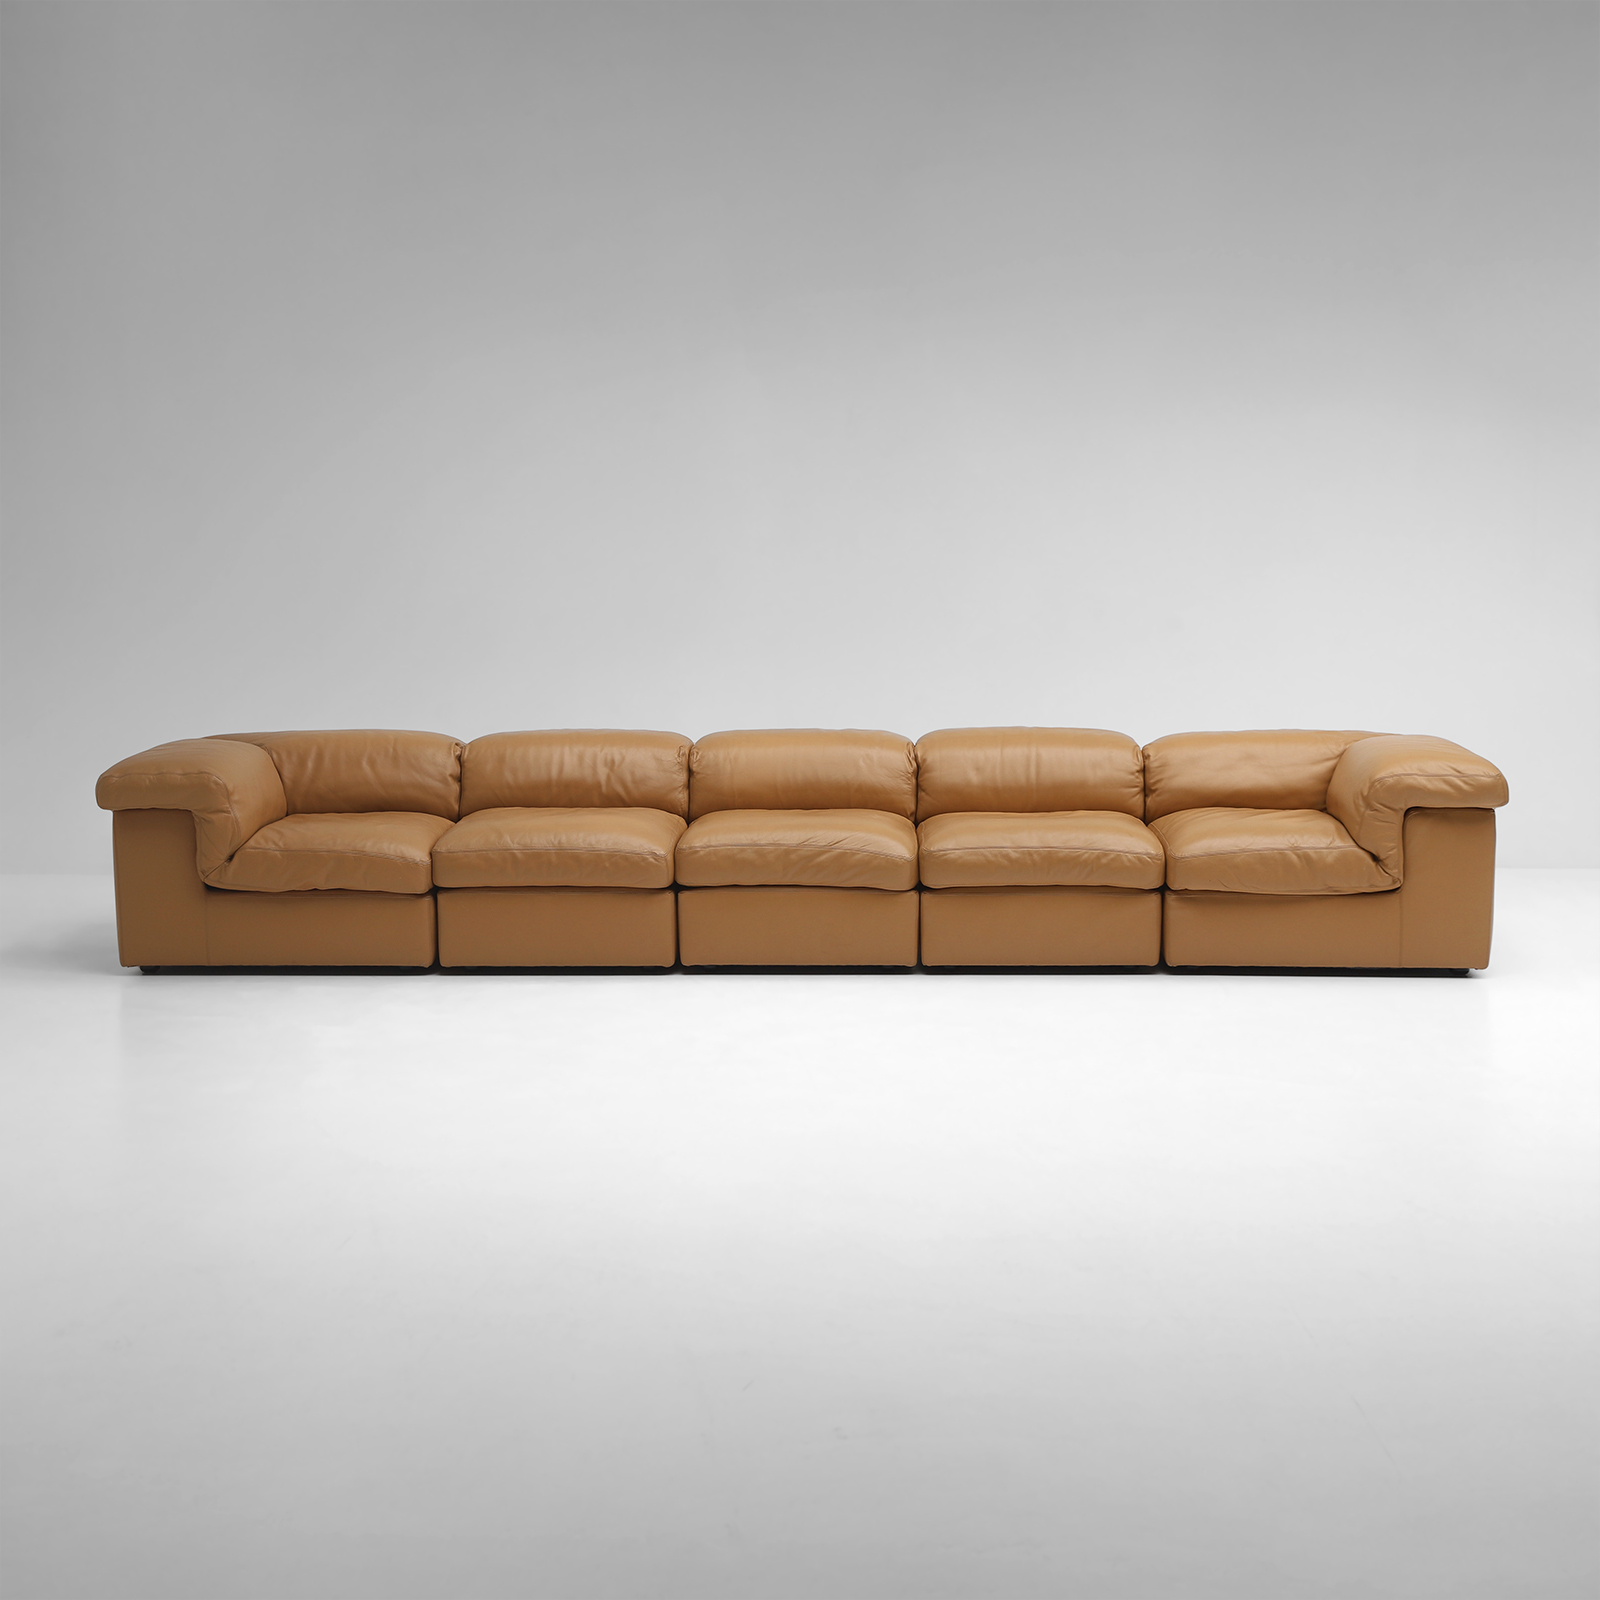 Durlet model 'Jeep' modular sofa set